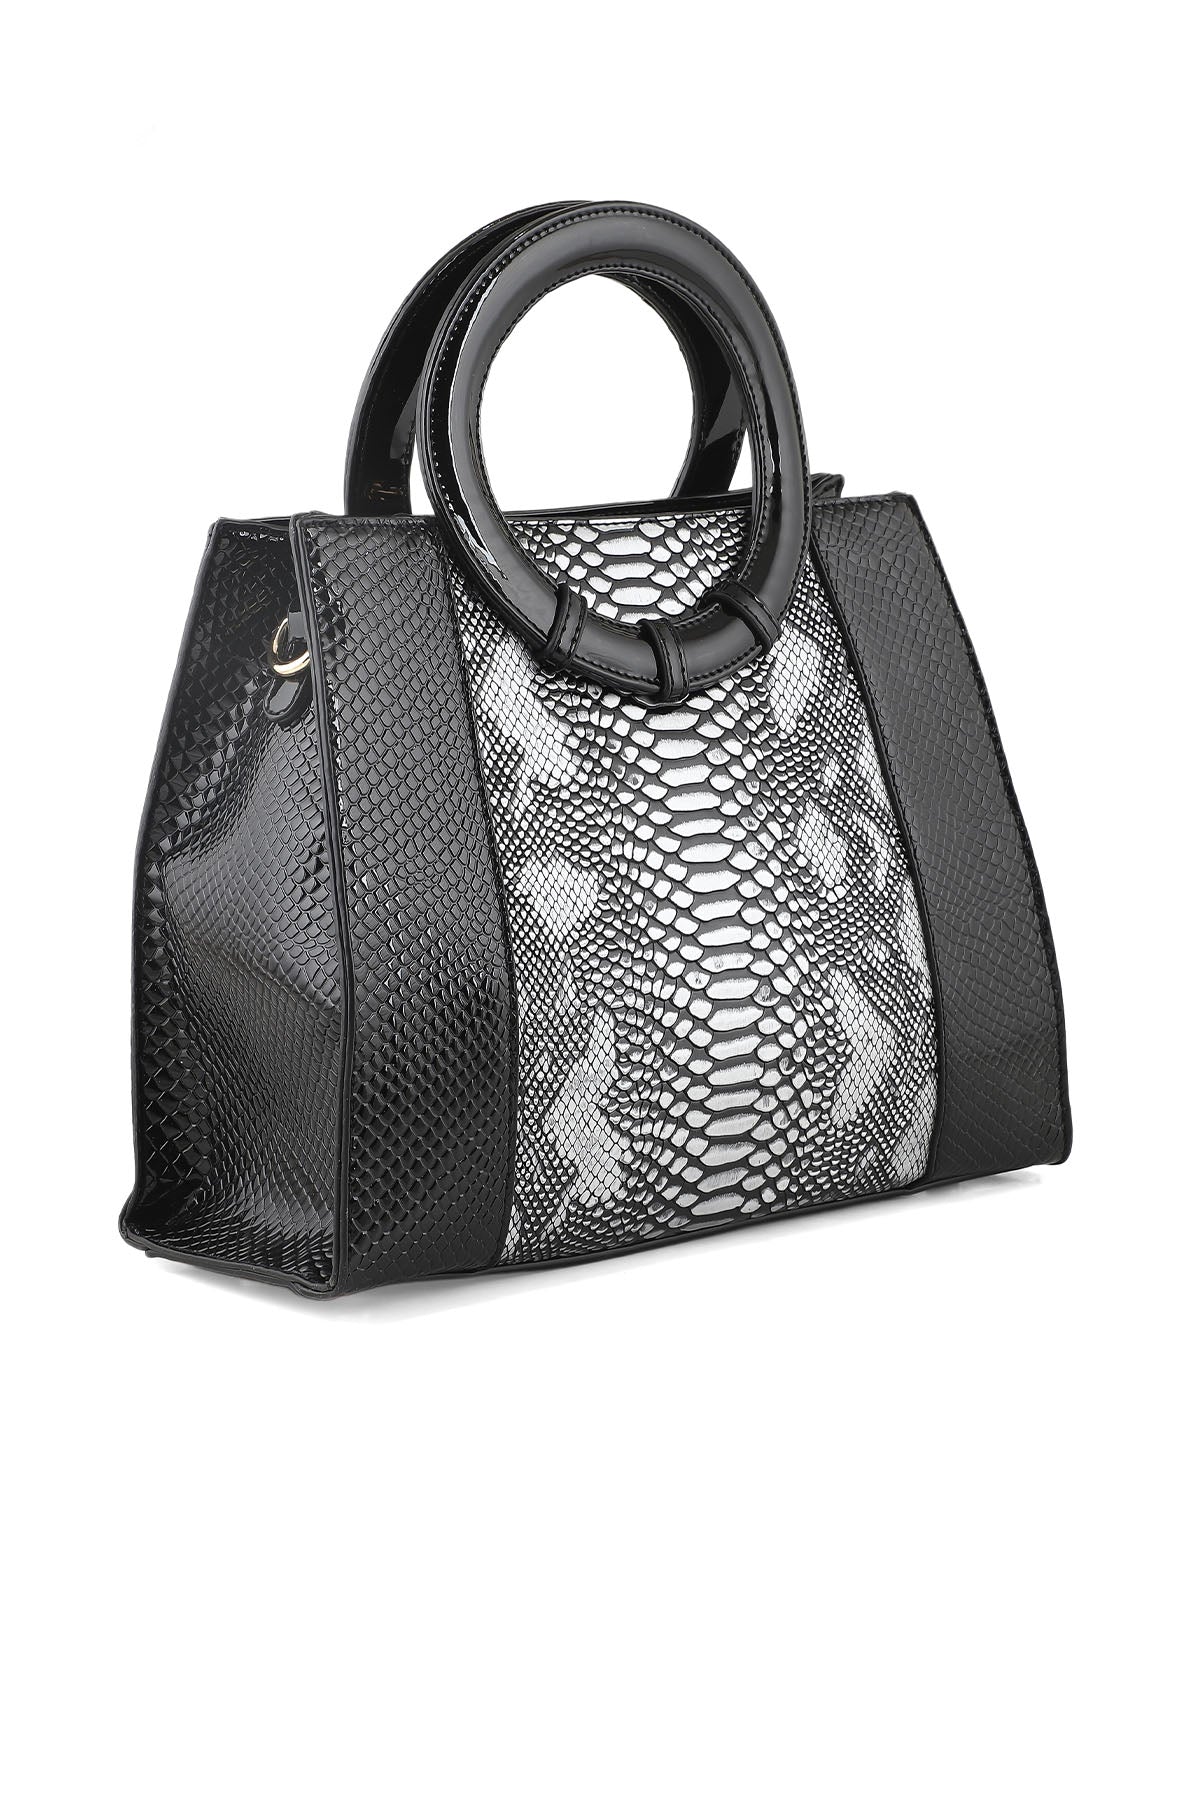 Top Handle Hand Bags B14996-Black